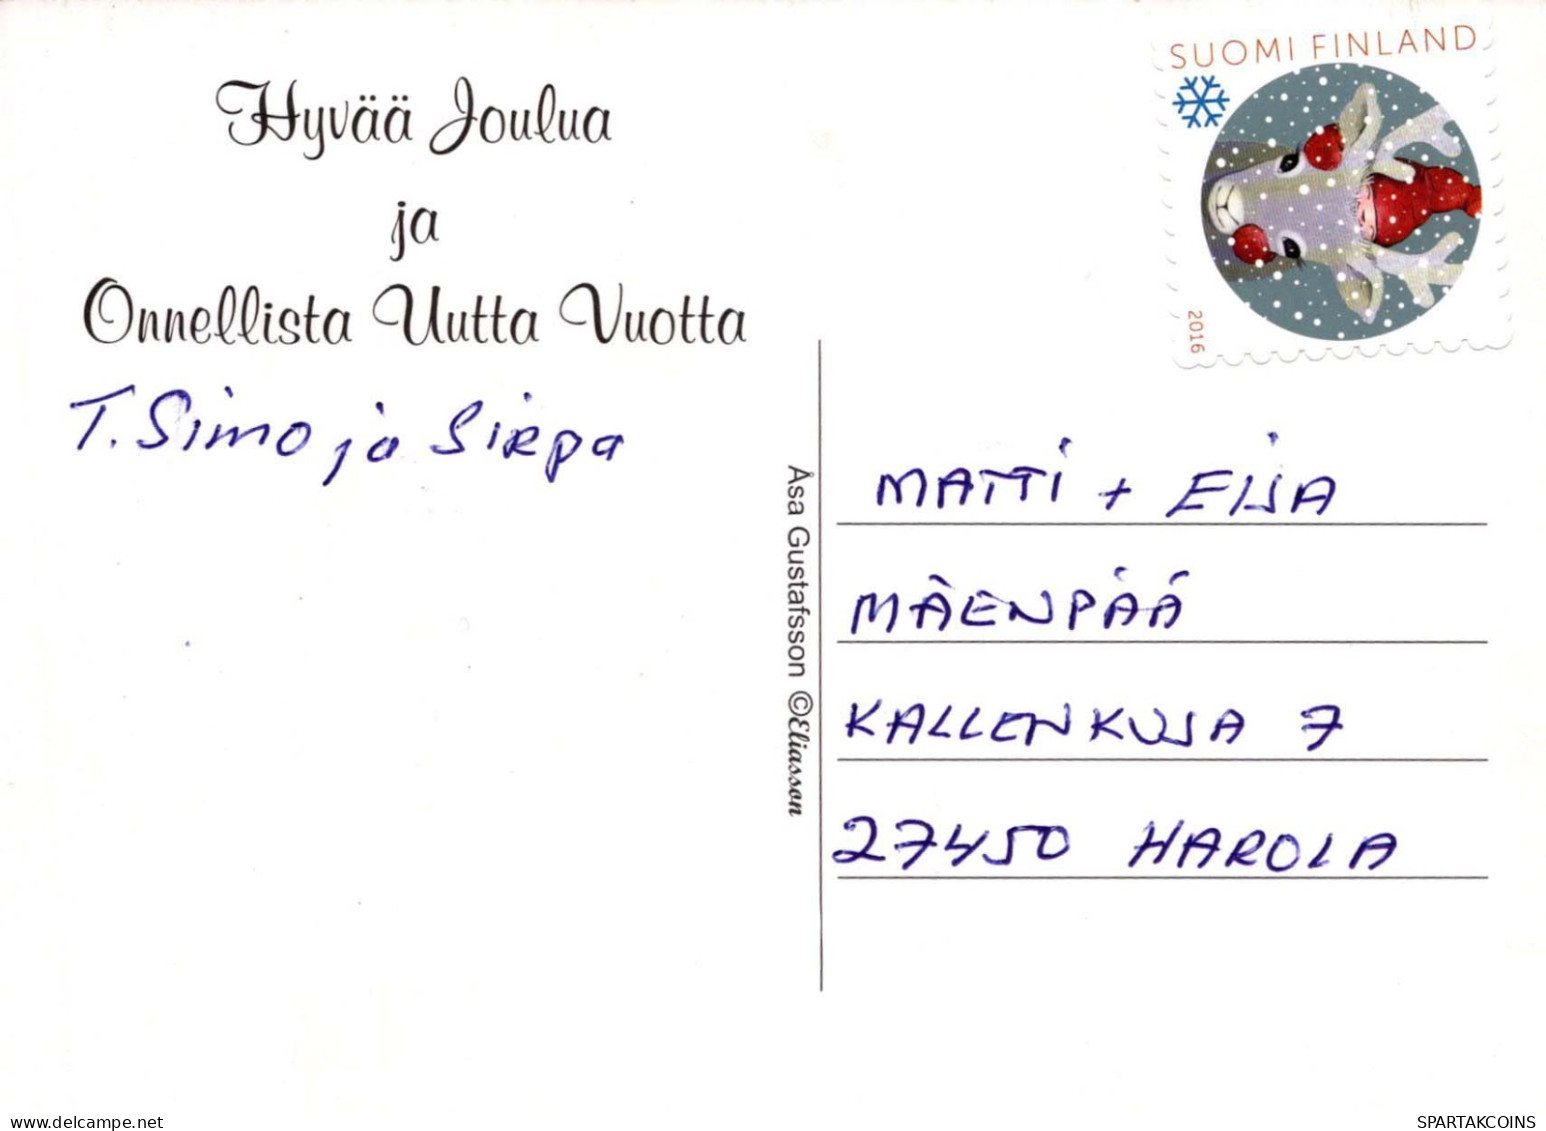 PAPÁ NOEL Feliz Año Navidad GNOMO Vintage Tarjeta Postal CPSM #PBL984.A - Santa Claus